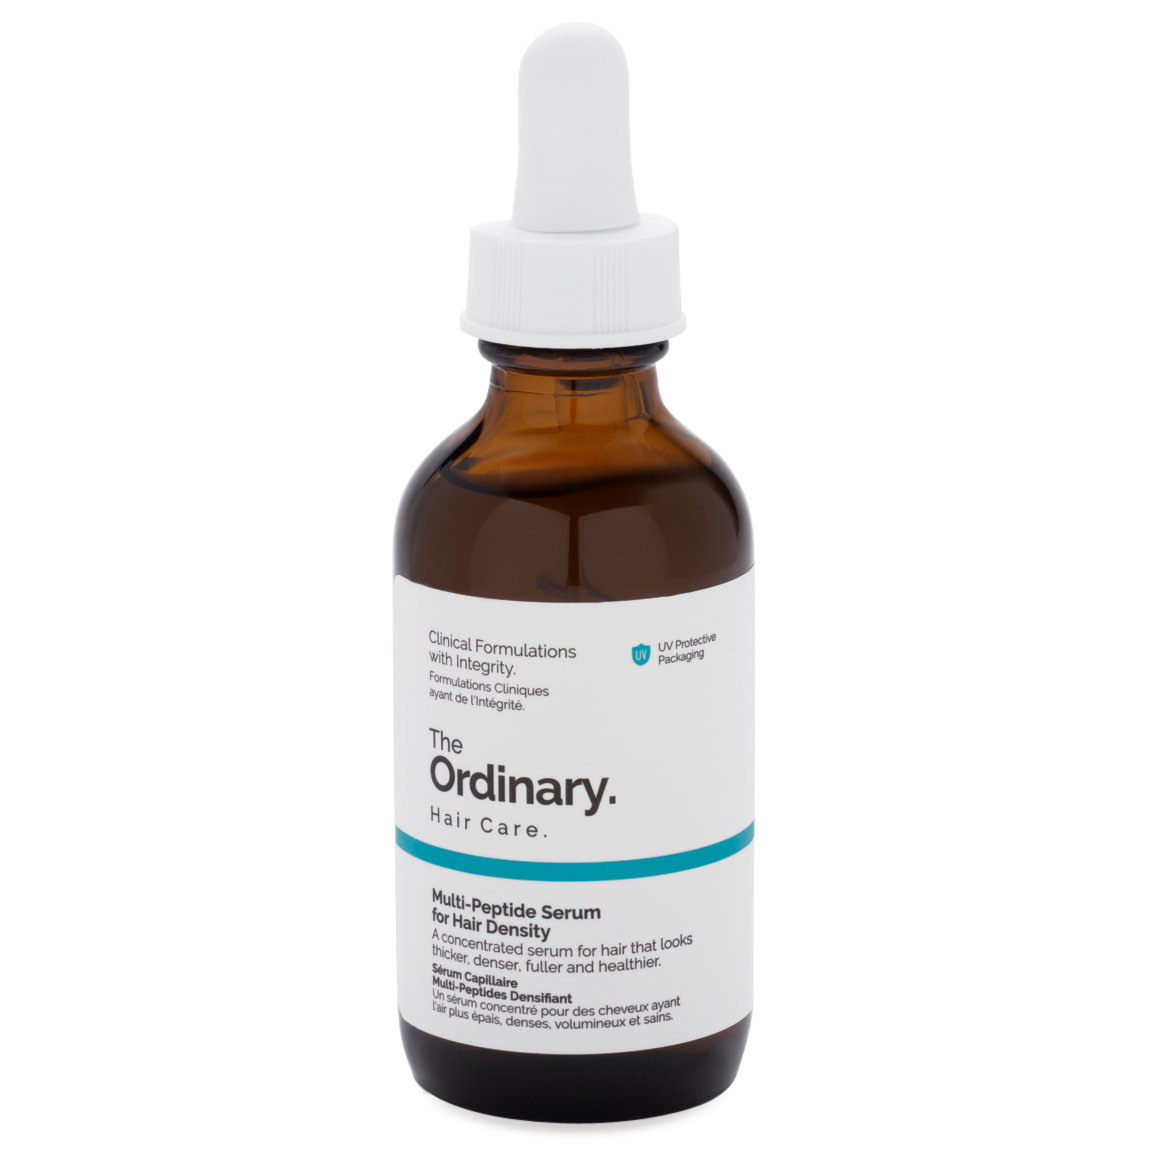 The Ordinary. Multi-Peptide Serum for Hair Density | Beautylish